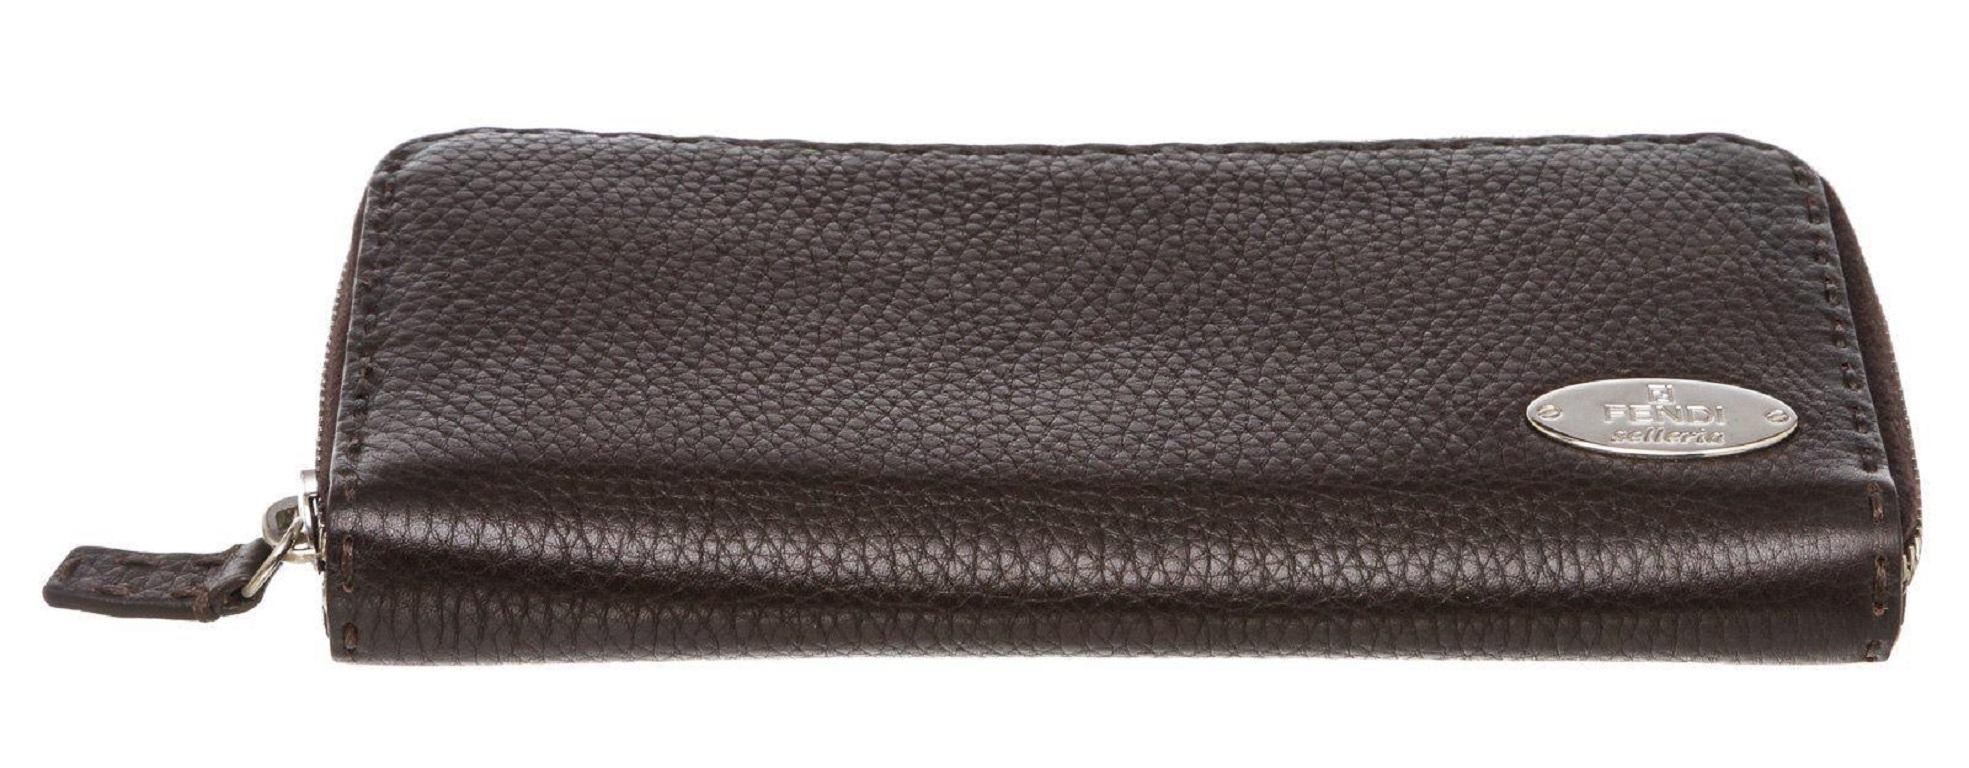 Fendi Salleria dark brown leather zip around wallet with silver-tone hardware In Good Condition For Sale In Irvine, CA